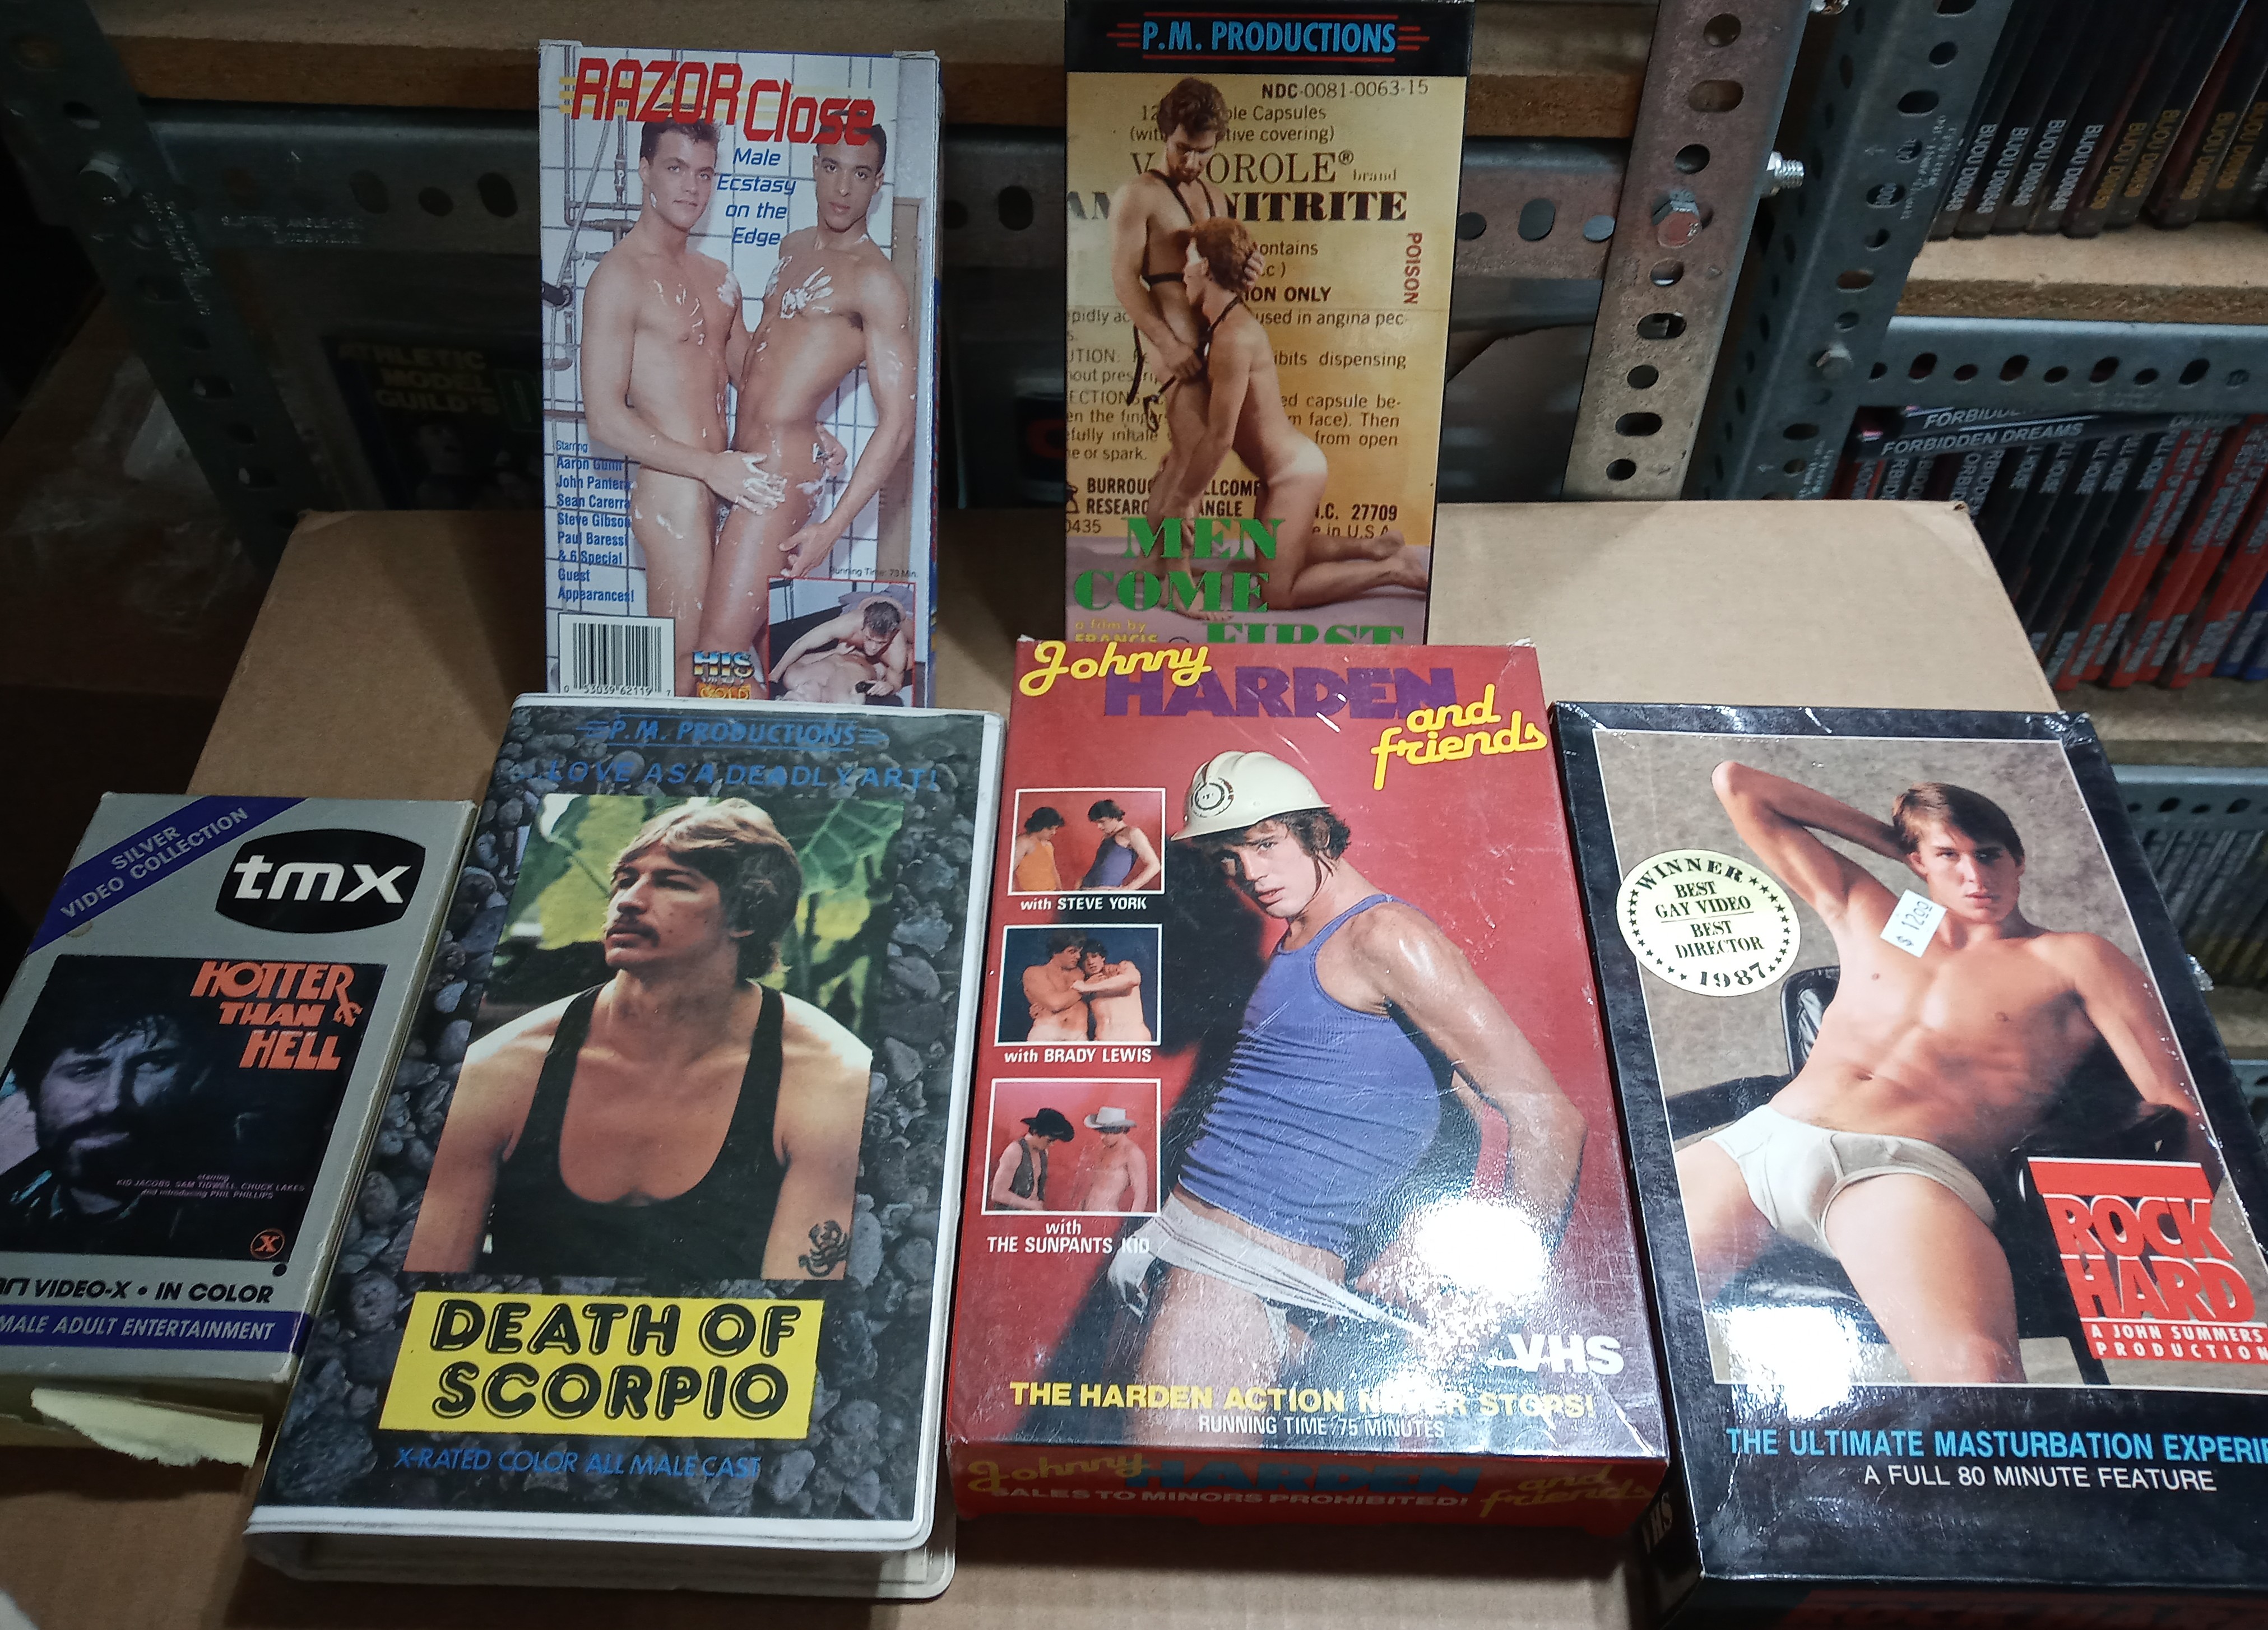 VHS and Beta gay porn tapes